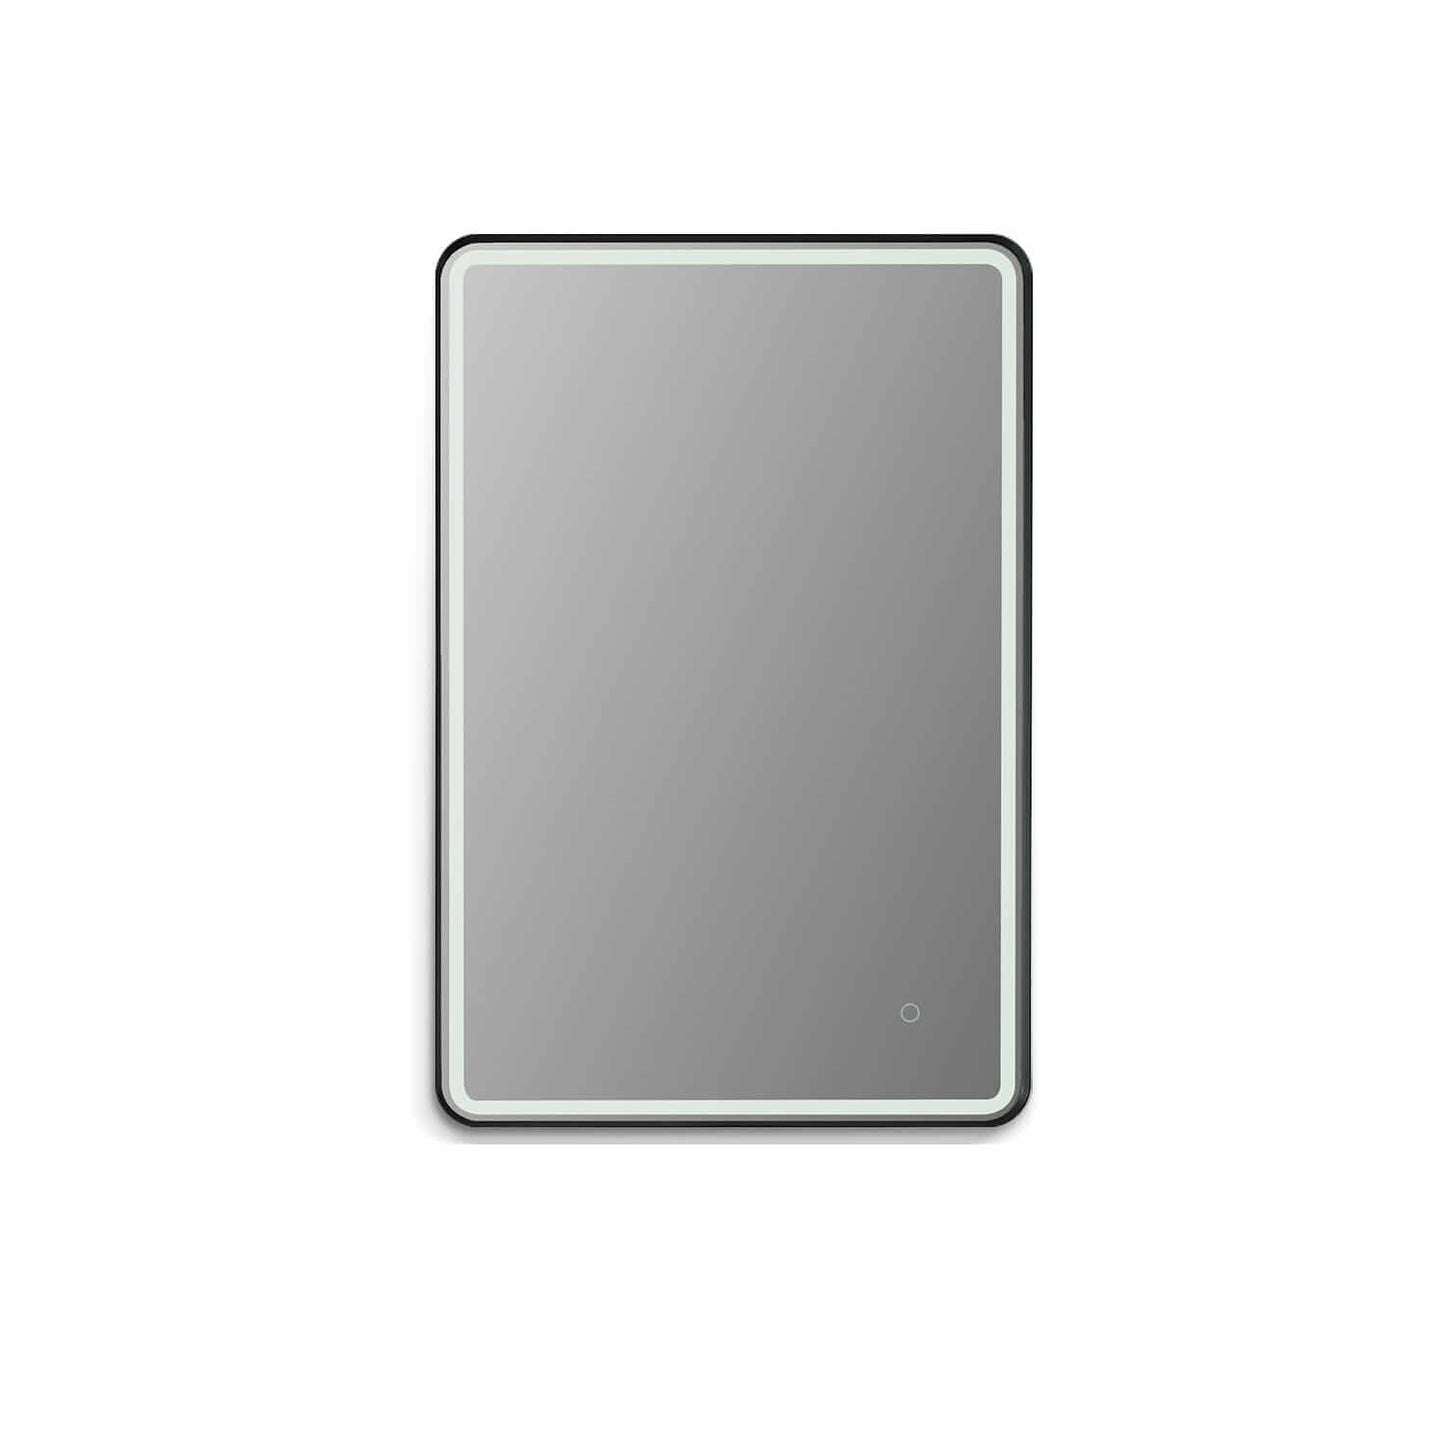 Lighted Bathroom Mirror - Altair Viaggi - 753024-LED-BF